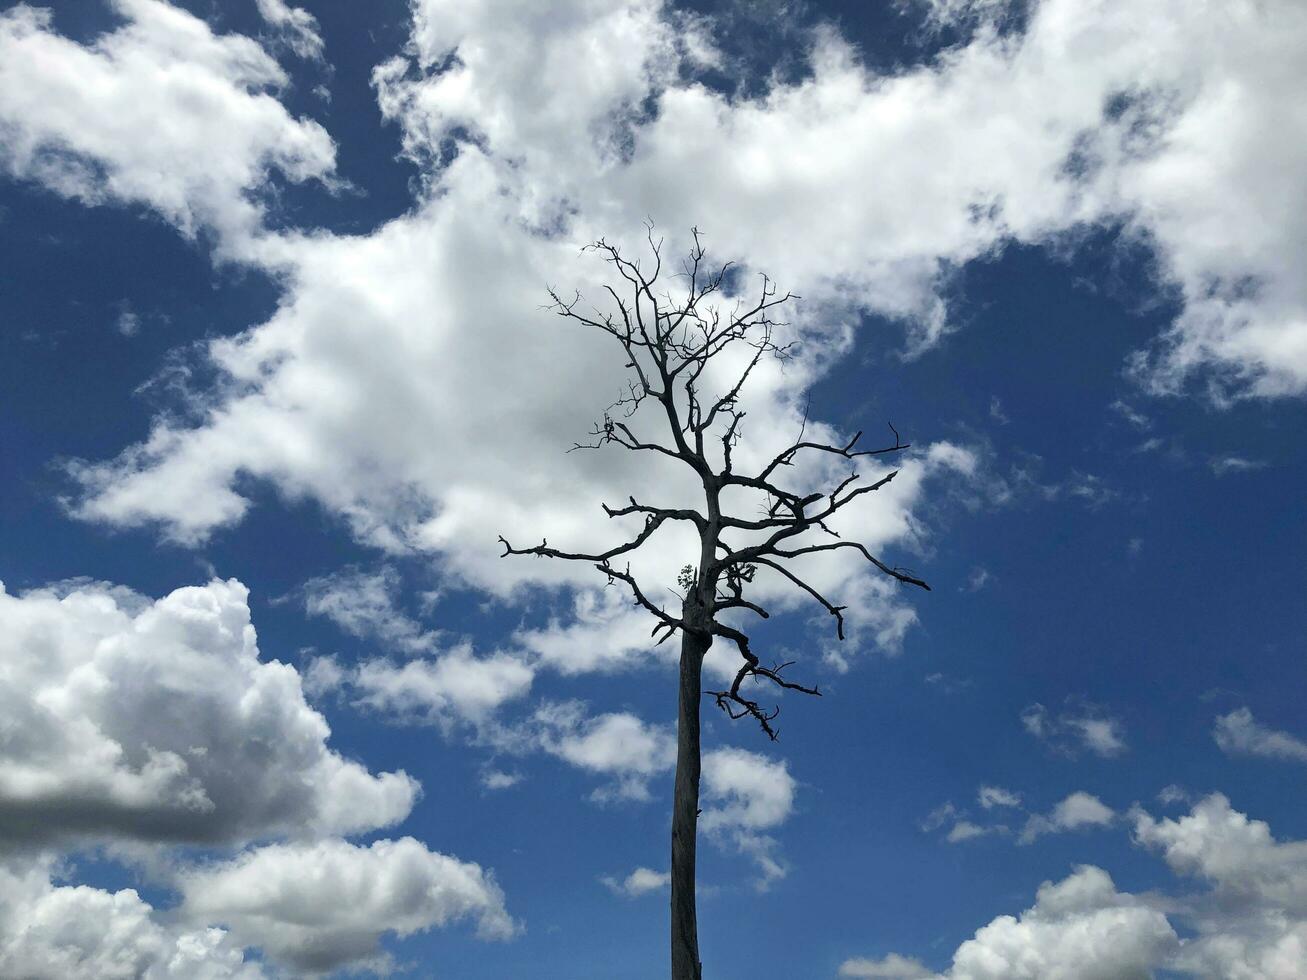 blauw lucht en wolken met dood bomen en leeg takken foto